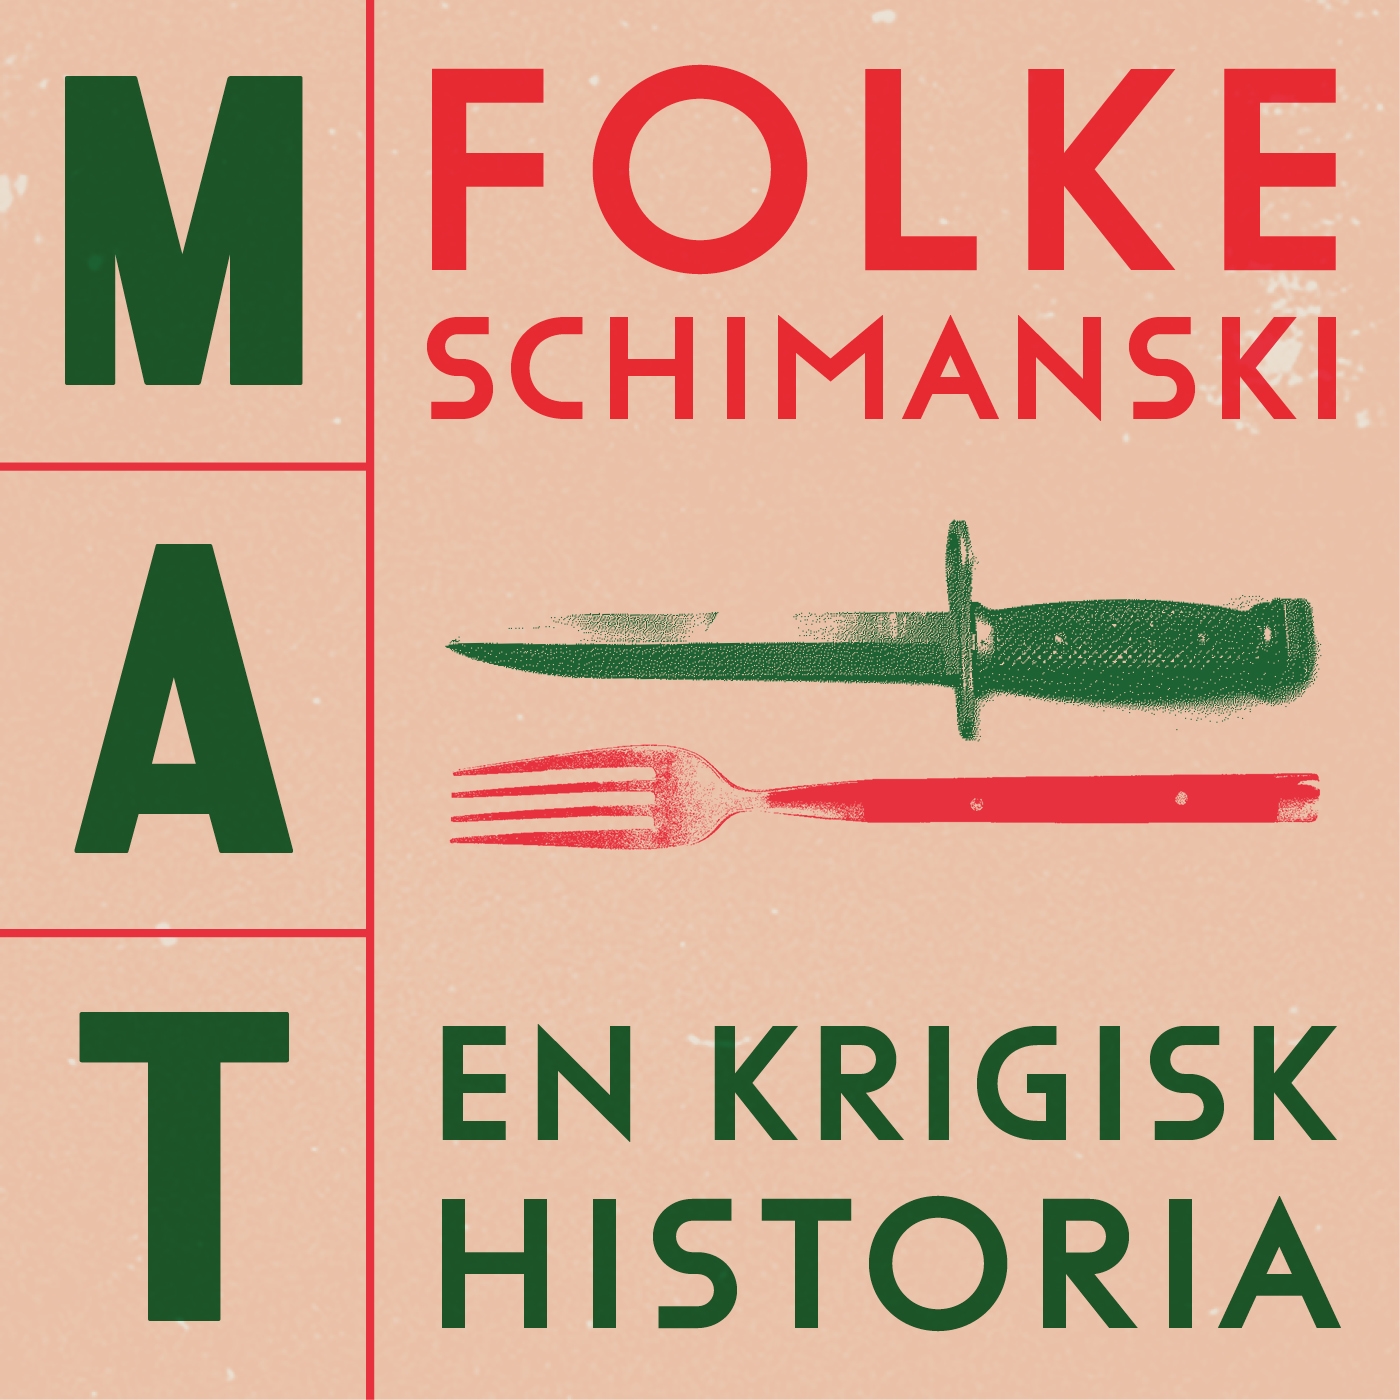 Katalogpost e-böcker - Götabiblioteken